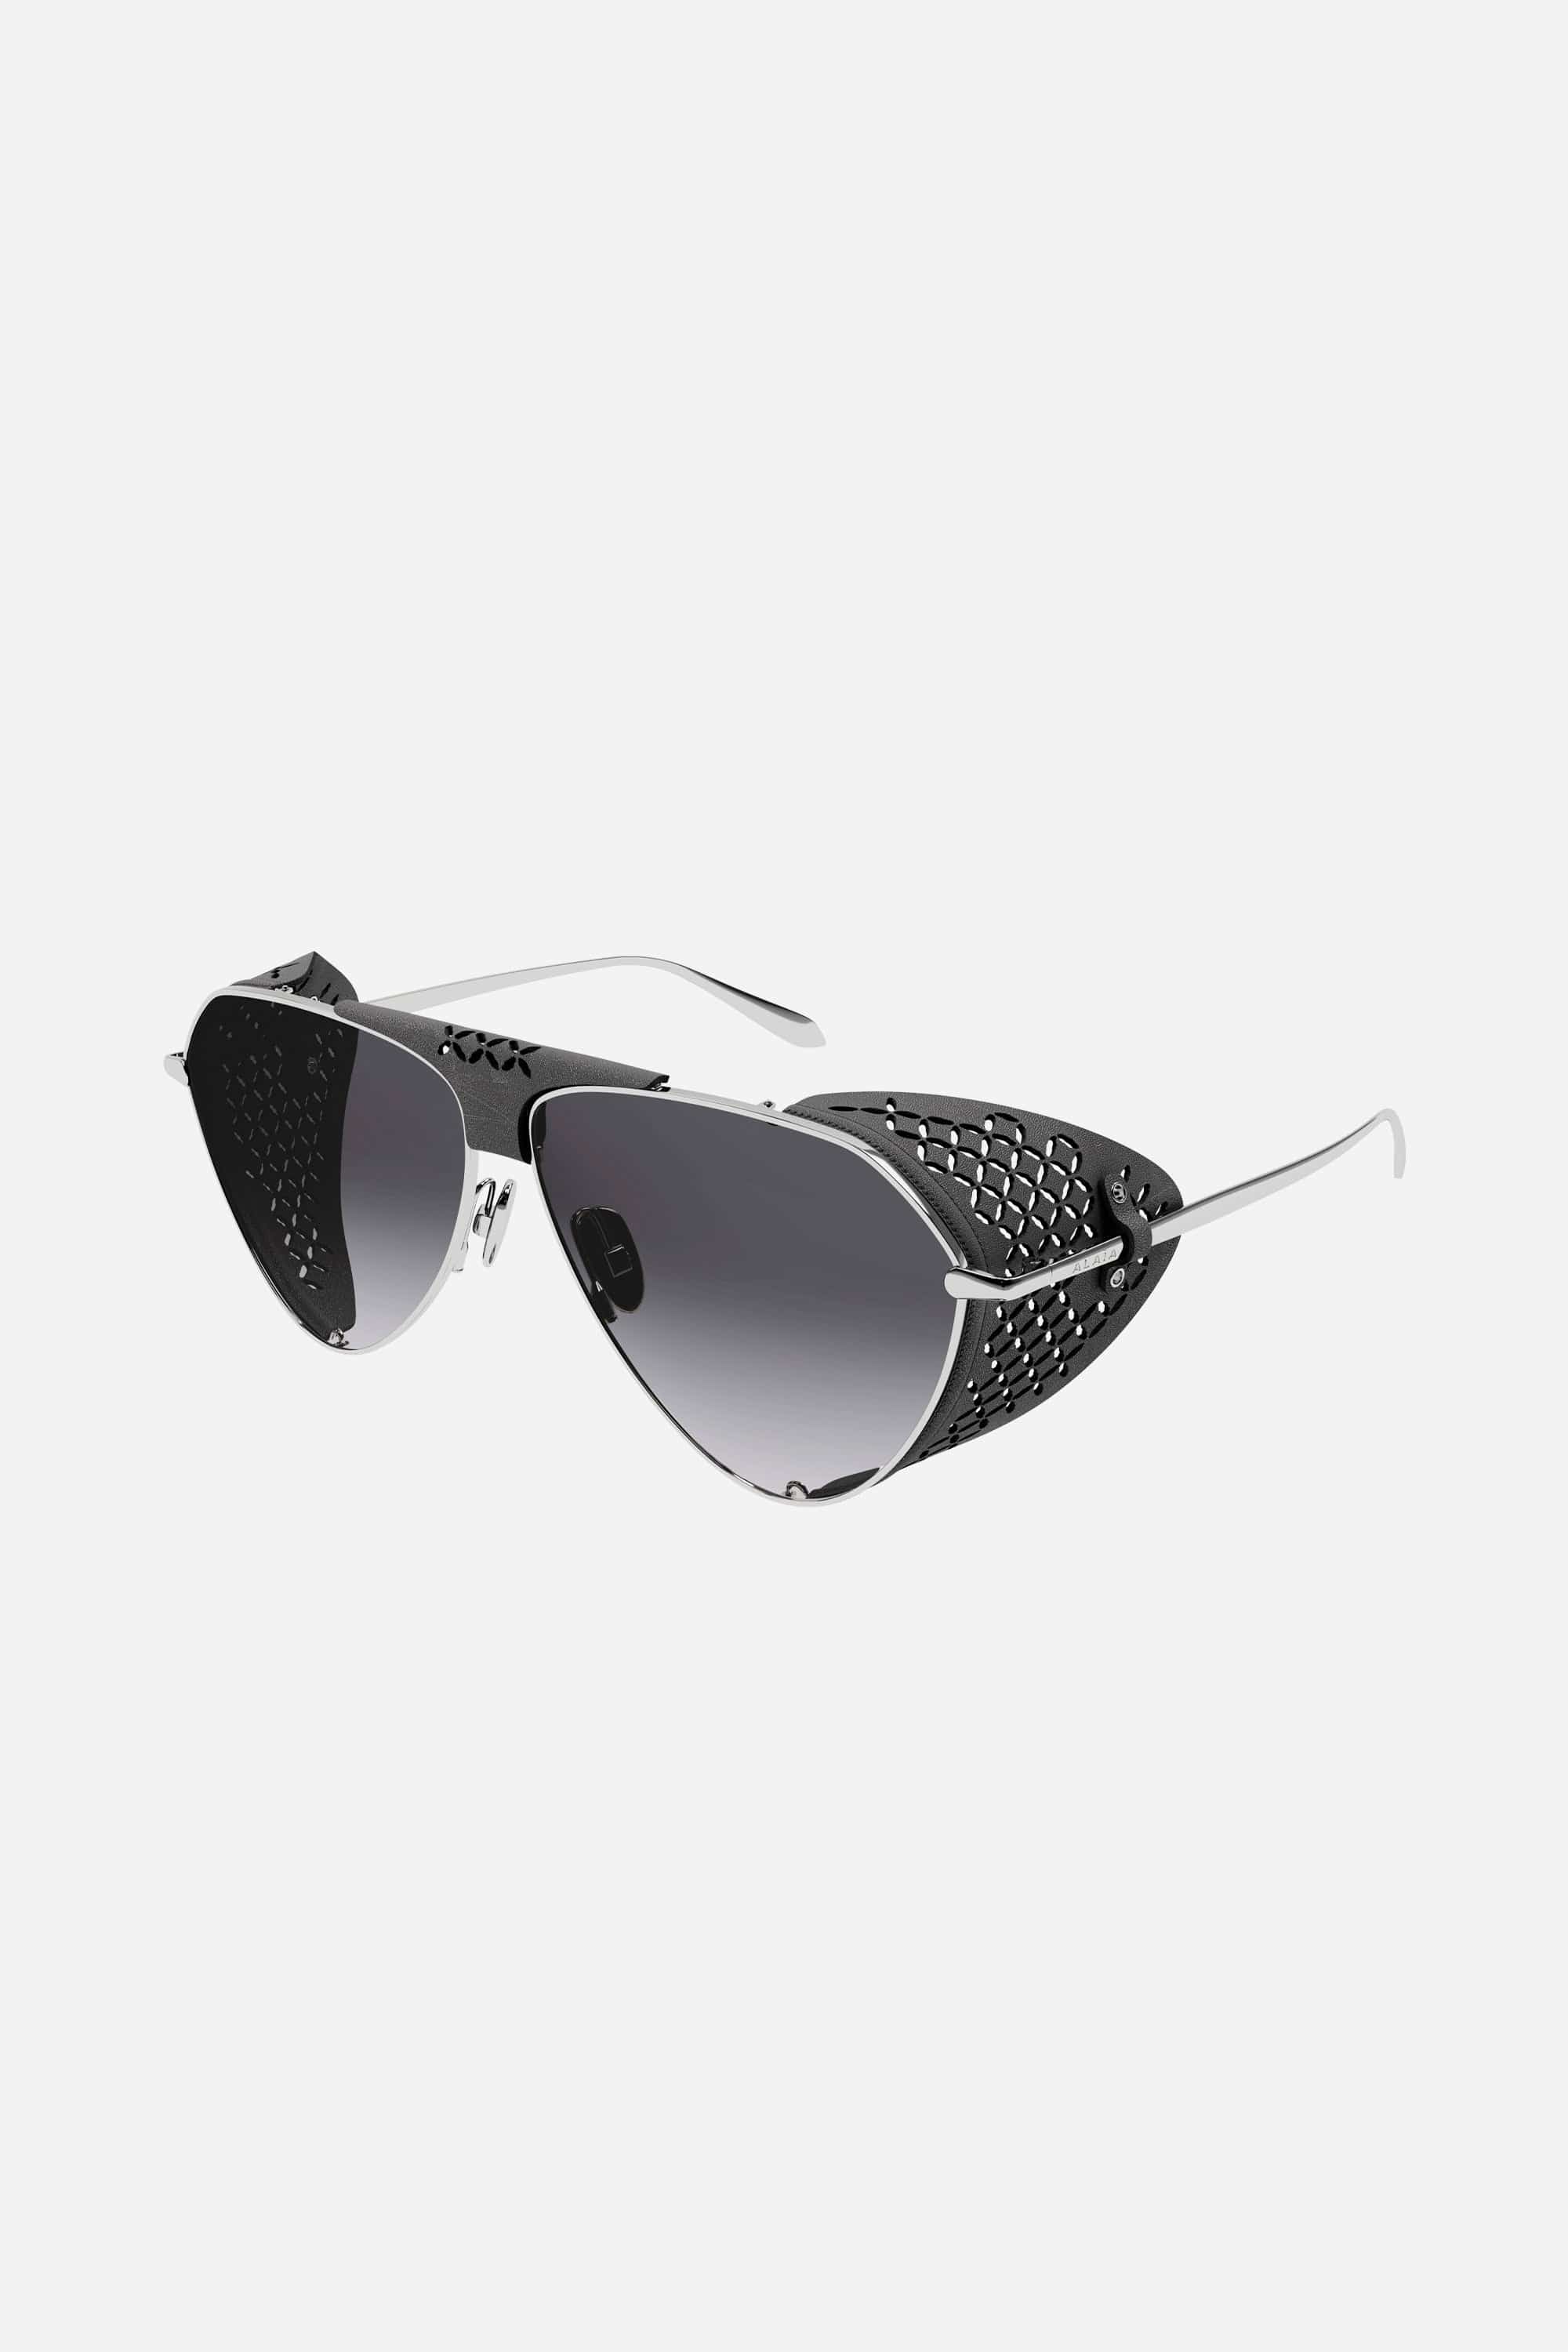 Alaia pilot metal sunglasses - Eyewear Club